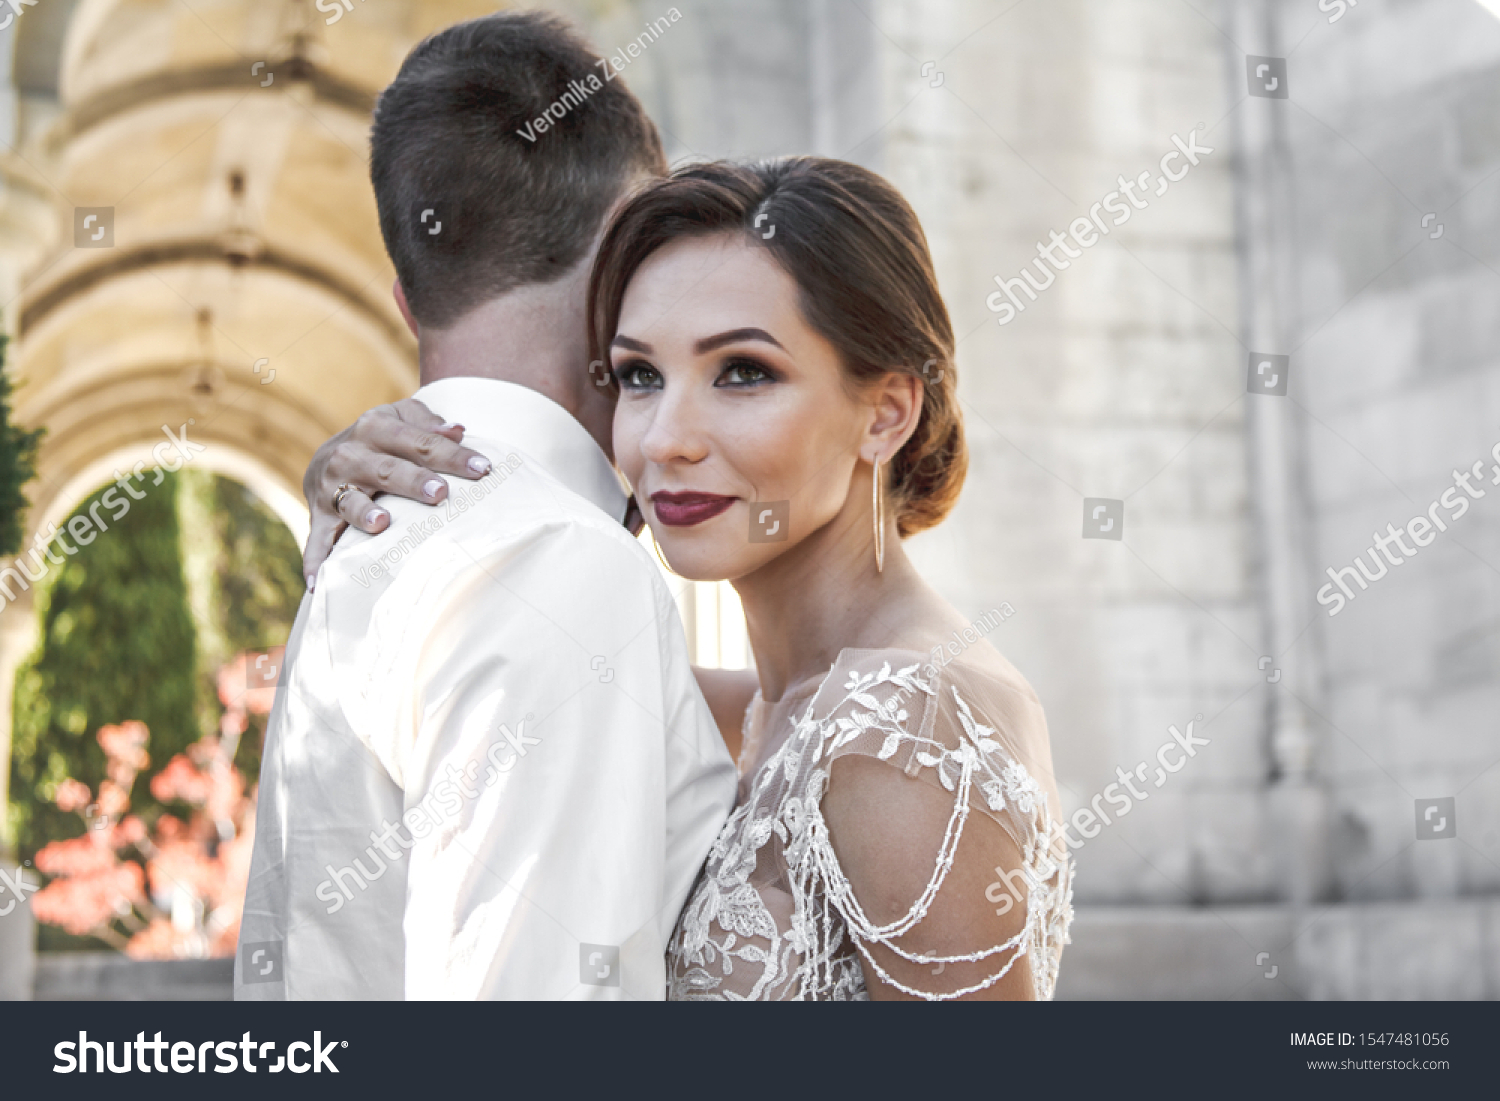 Portreit of wedding couple hugging on the romantic old city. Bride wearing elegant wedding dress  #1547481056